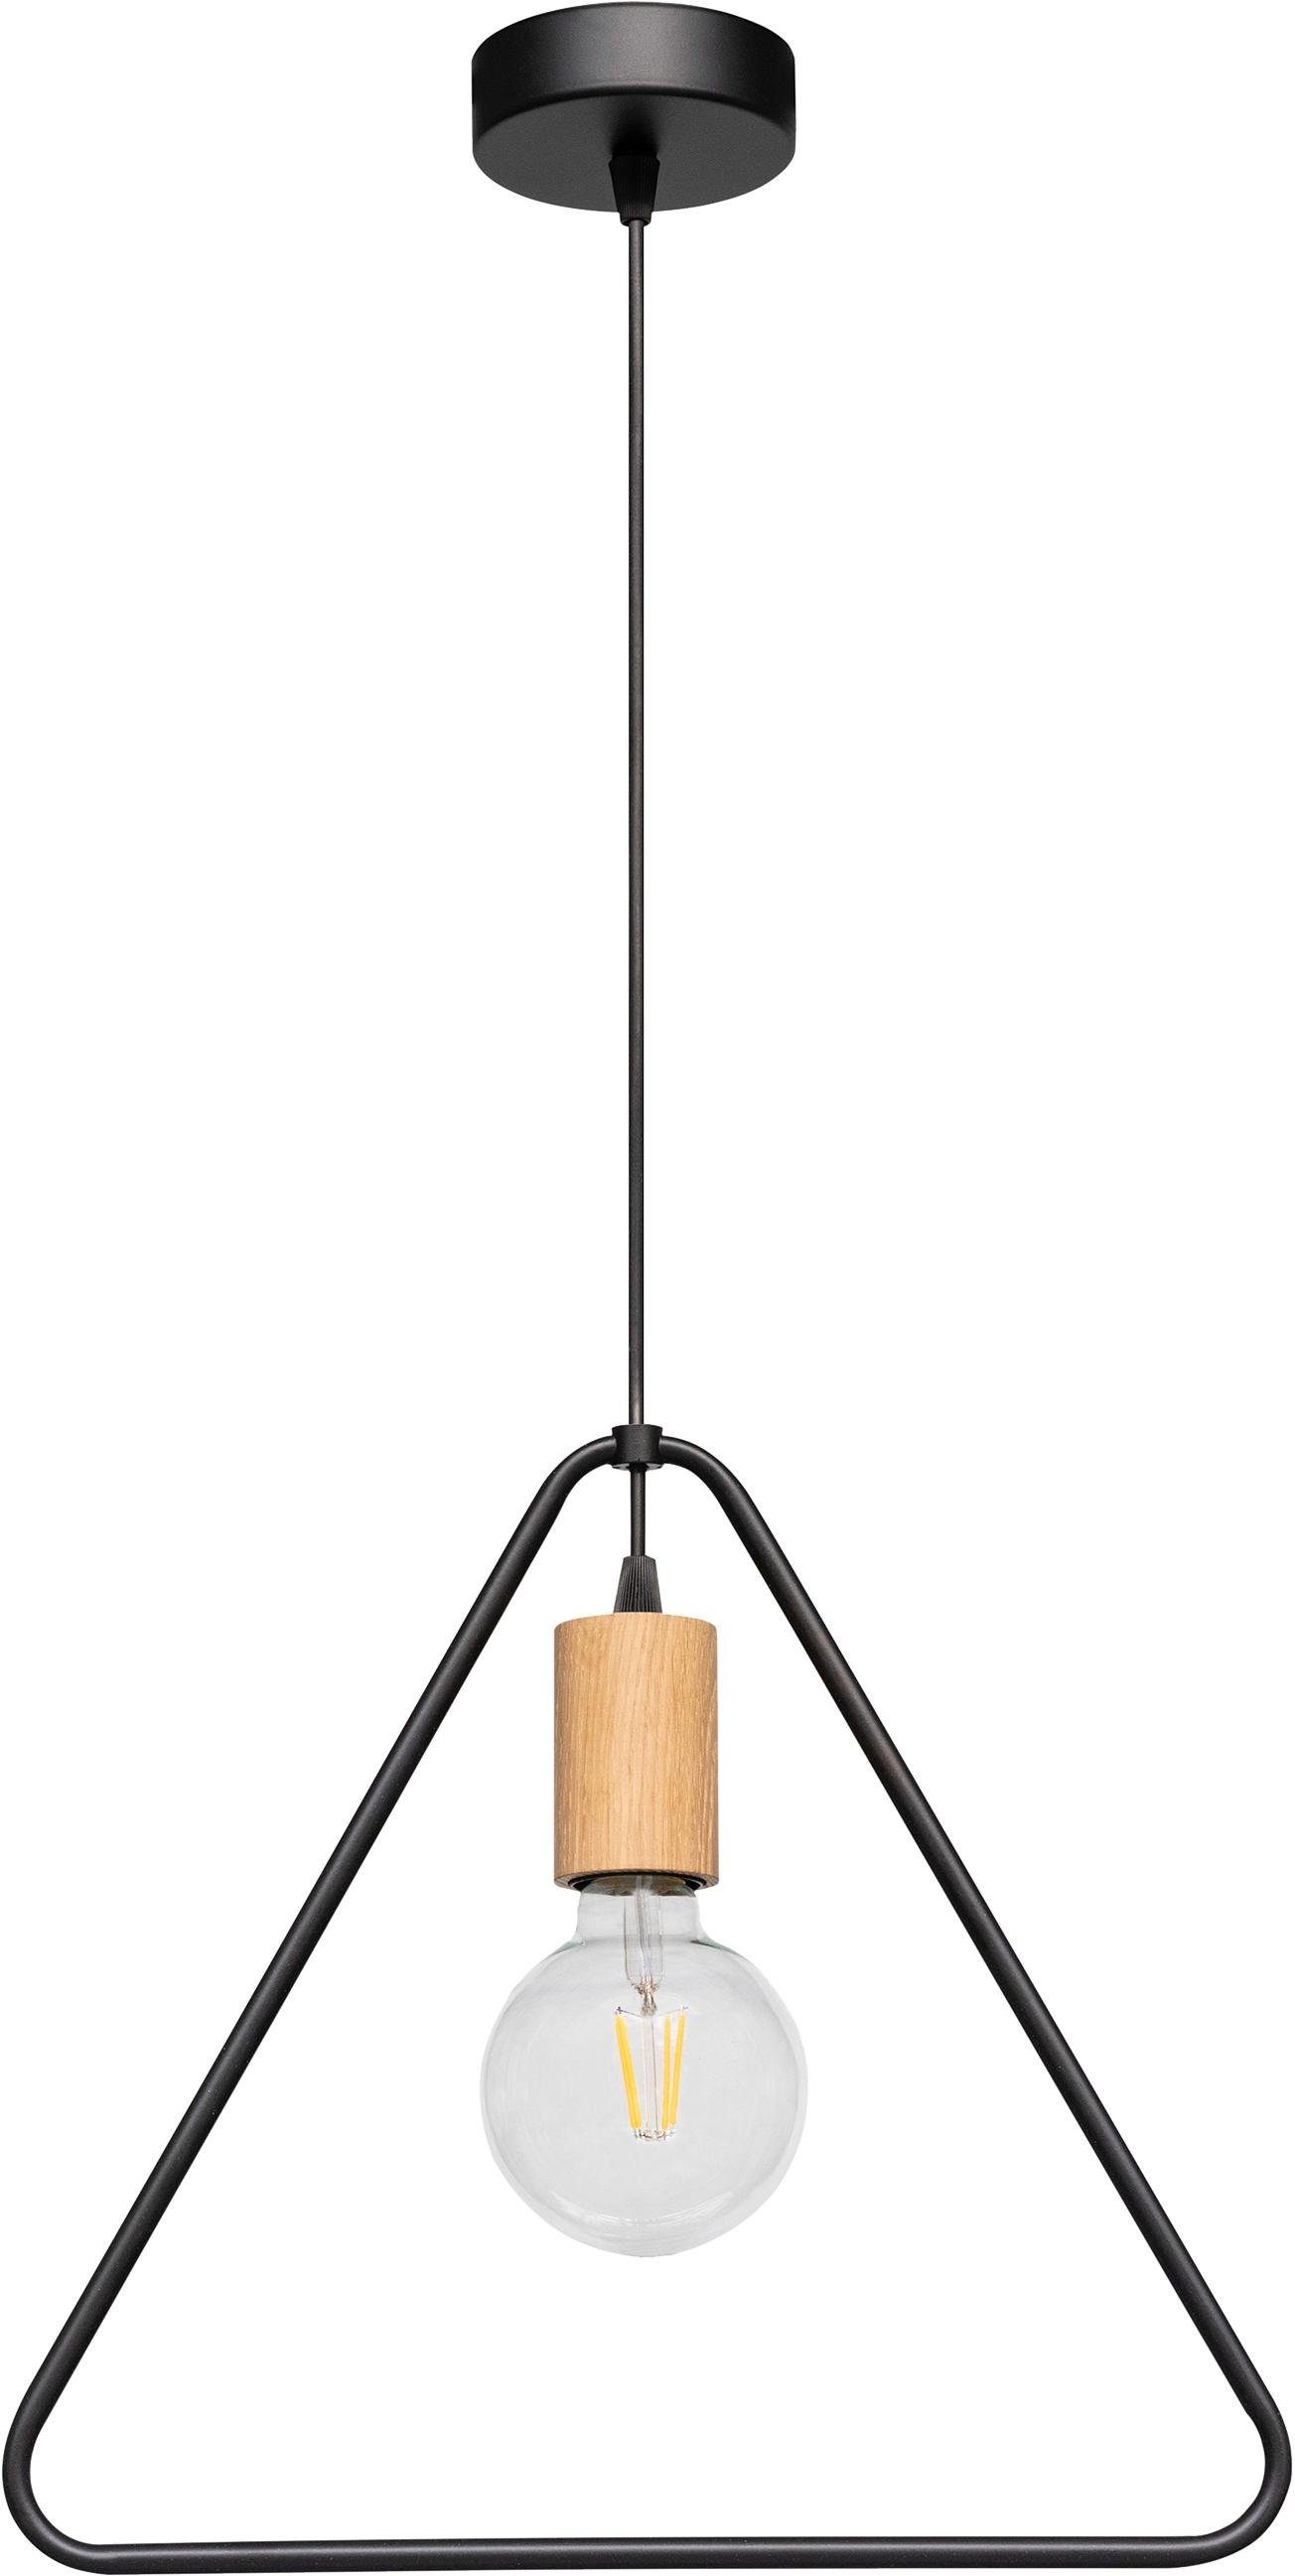 SPOT Light Hanglamp CARSTEN WOOD Hanglamp, moderne lamp van metaal en eikenhout, bijpassende LM E27/exclusief, Made in Europe